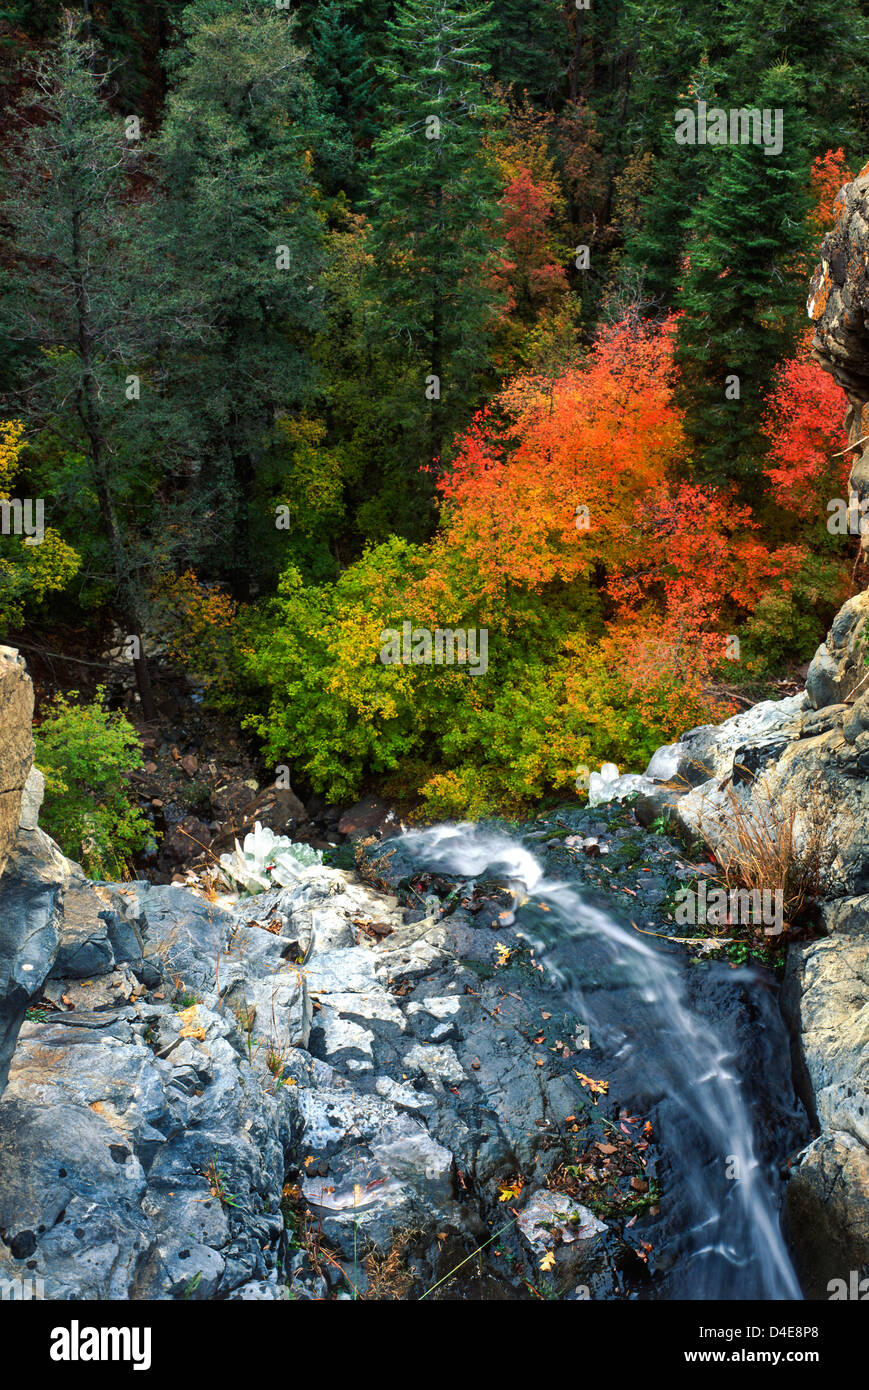 Workman Falls flowing at Autumn time, Tonto National Forest, Arizona. USA. Stock Photo